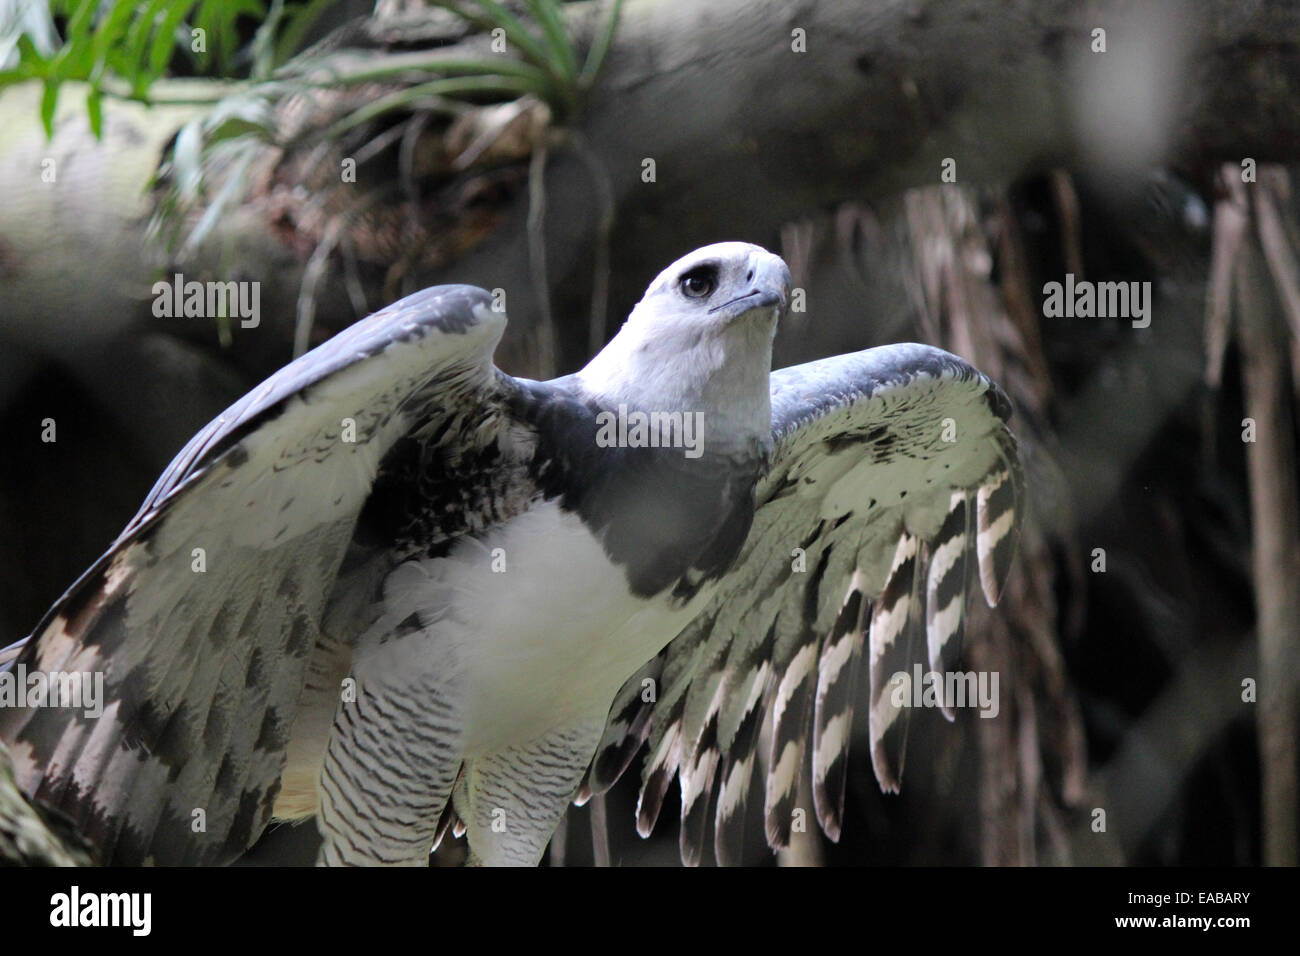 Harpy Eagle spreading it's wings before flight Stock Photo - Alamy